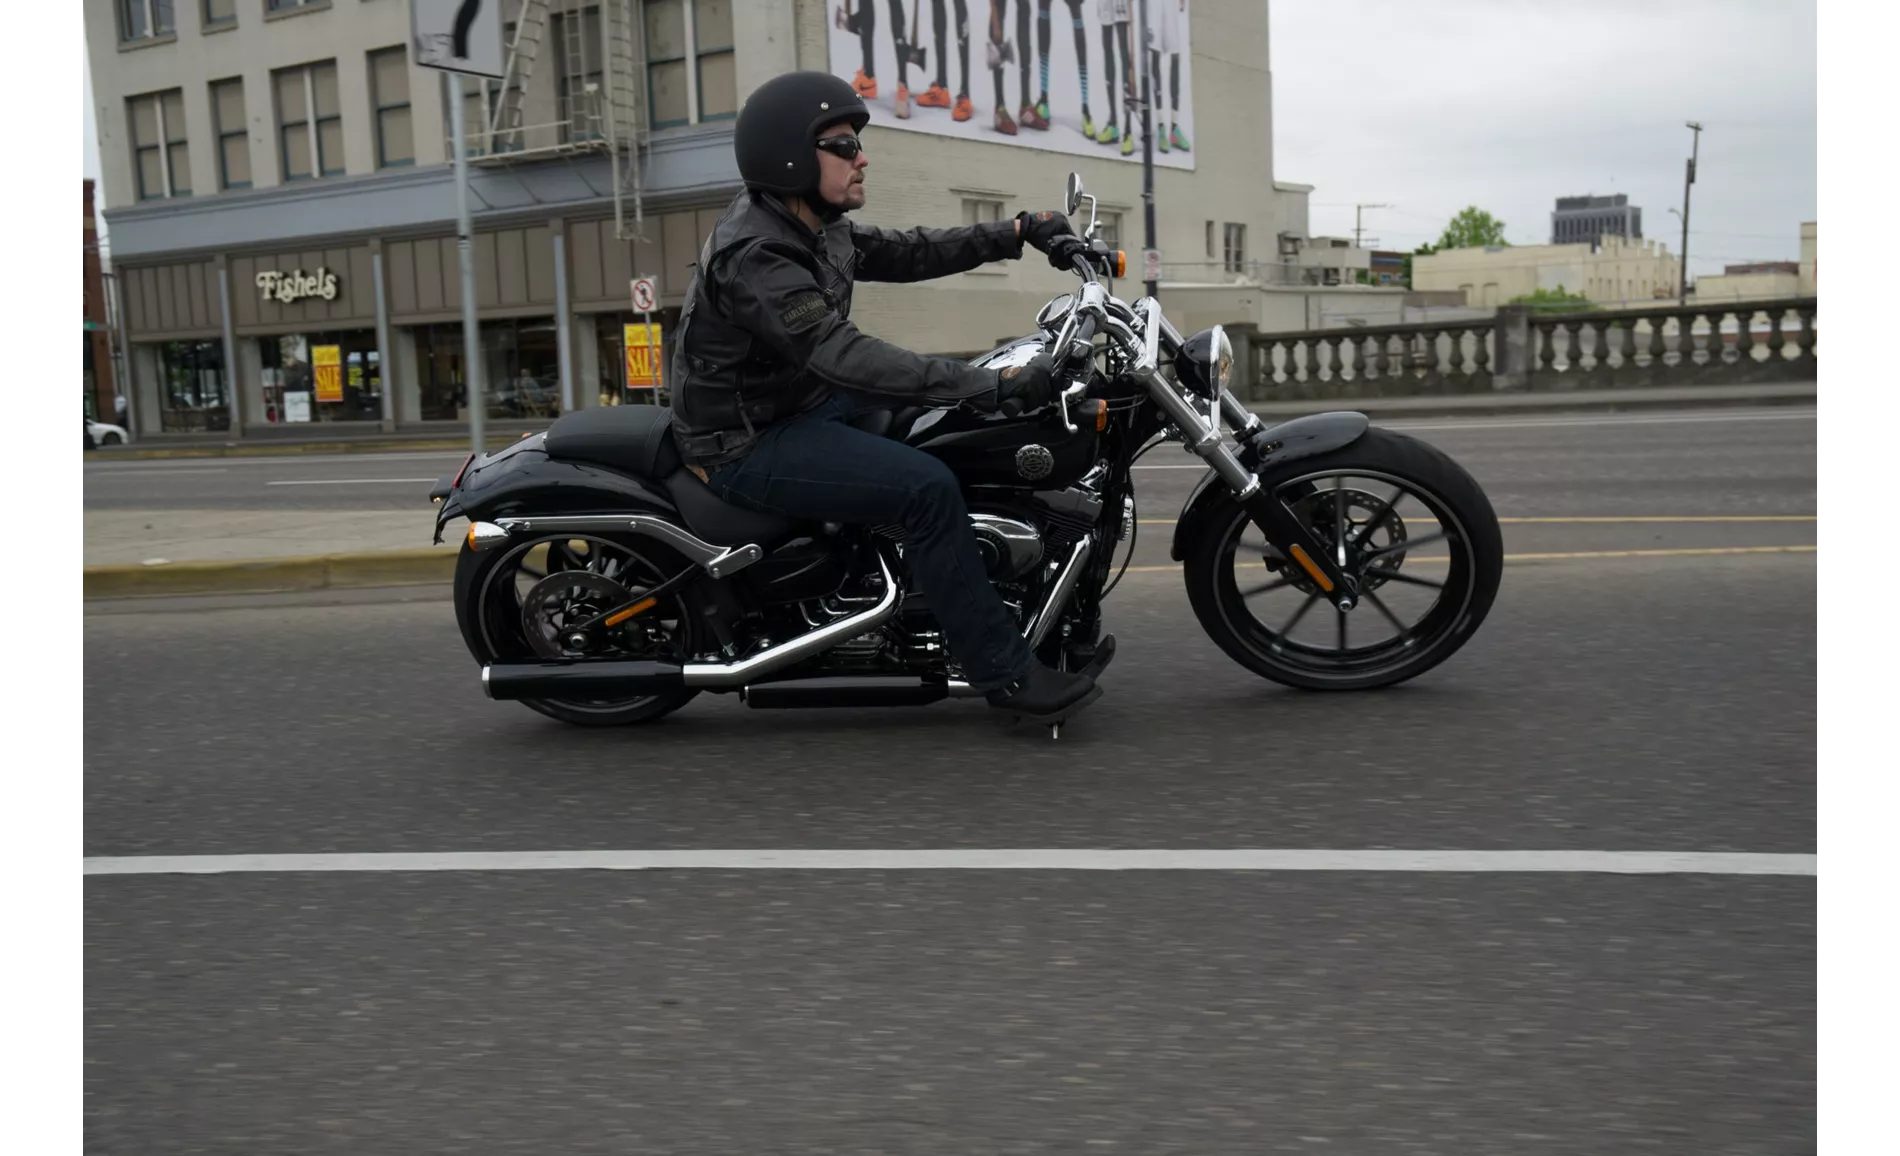 Harley-Davidson Softail Breakout FXSB 2016